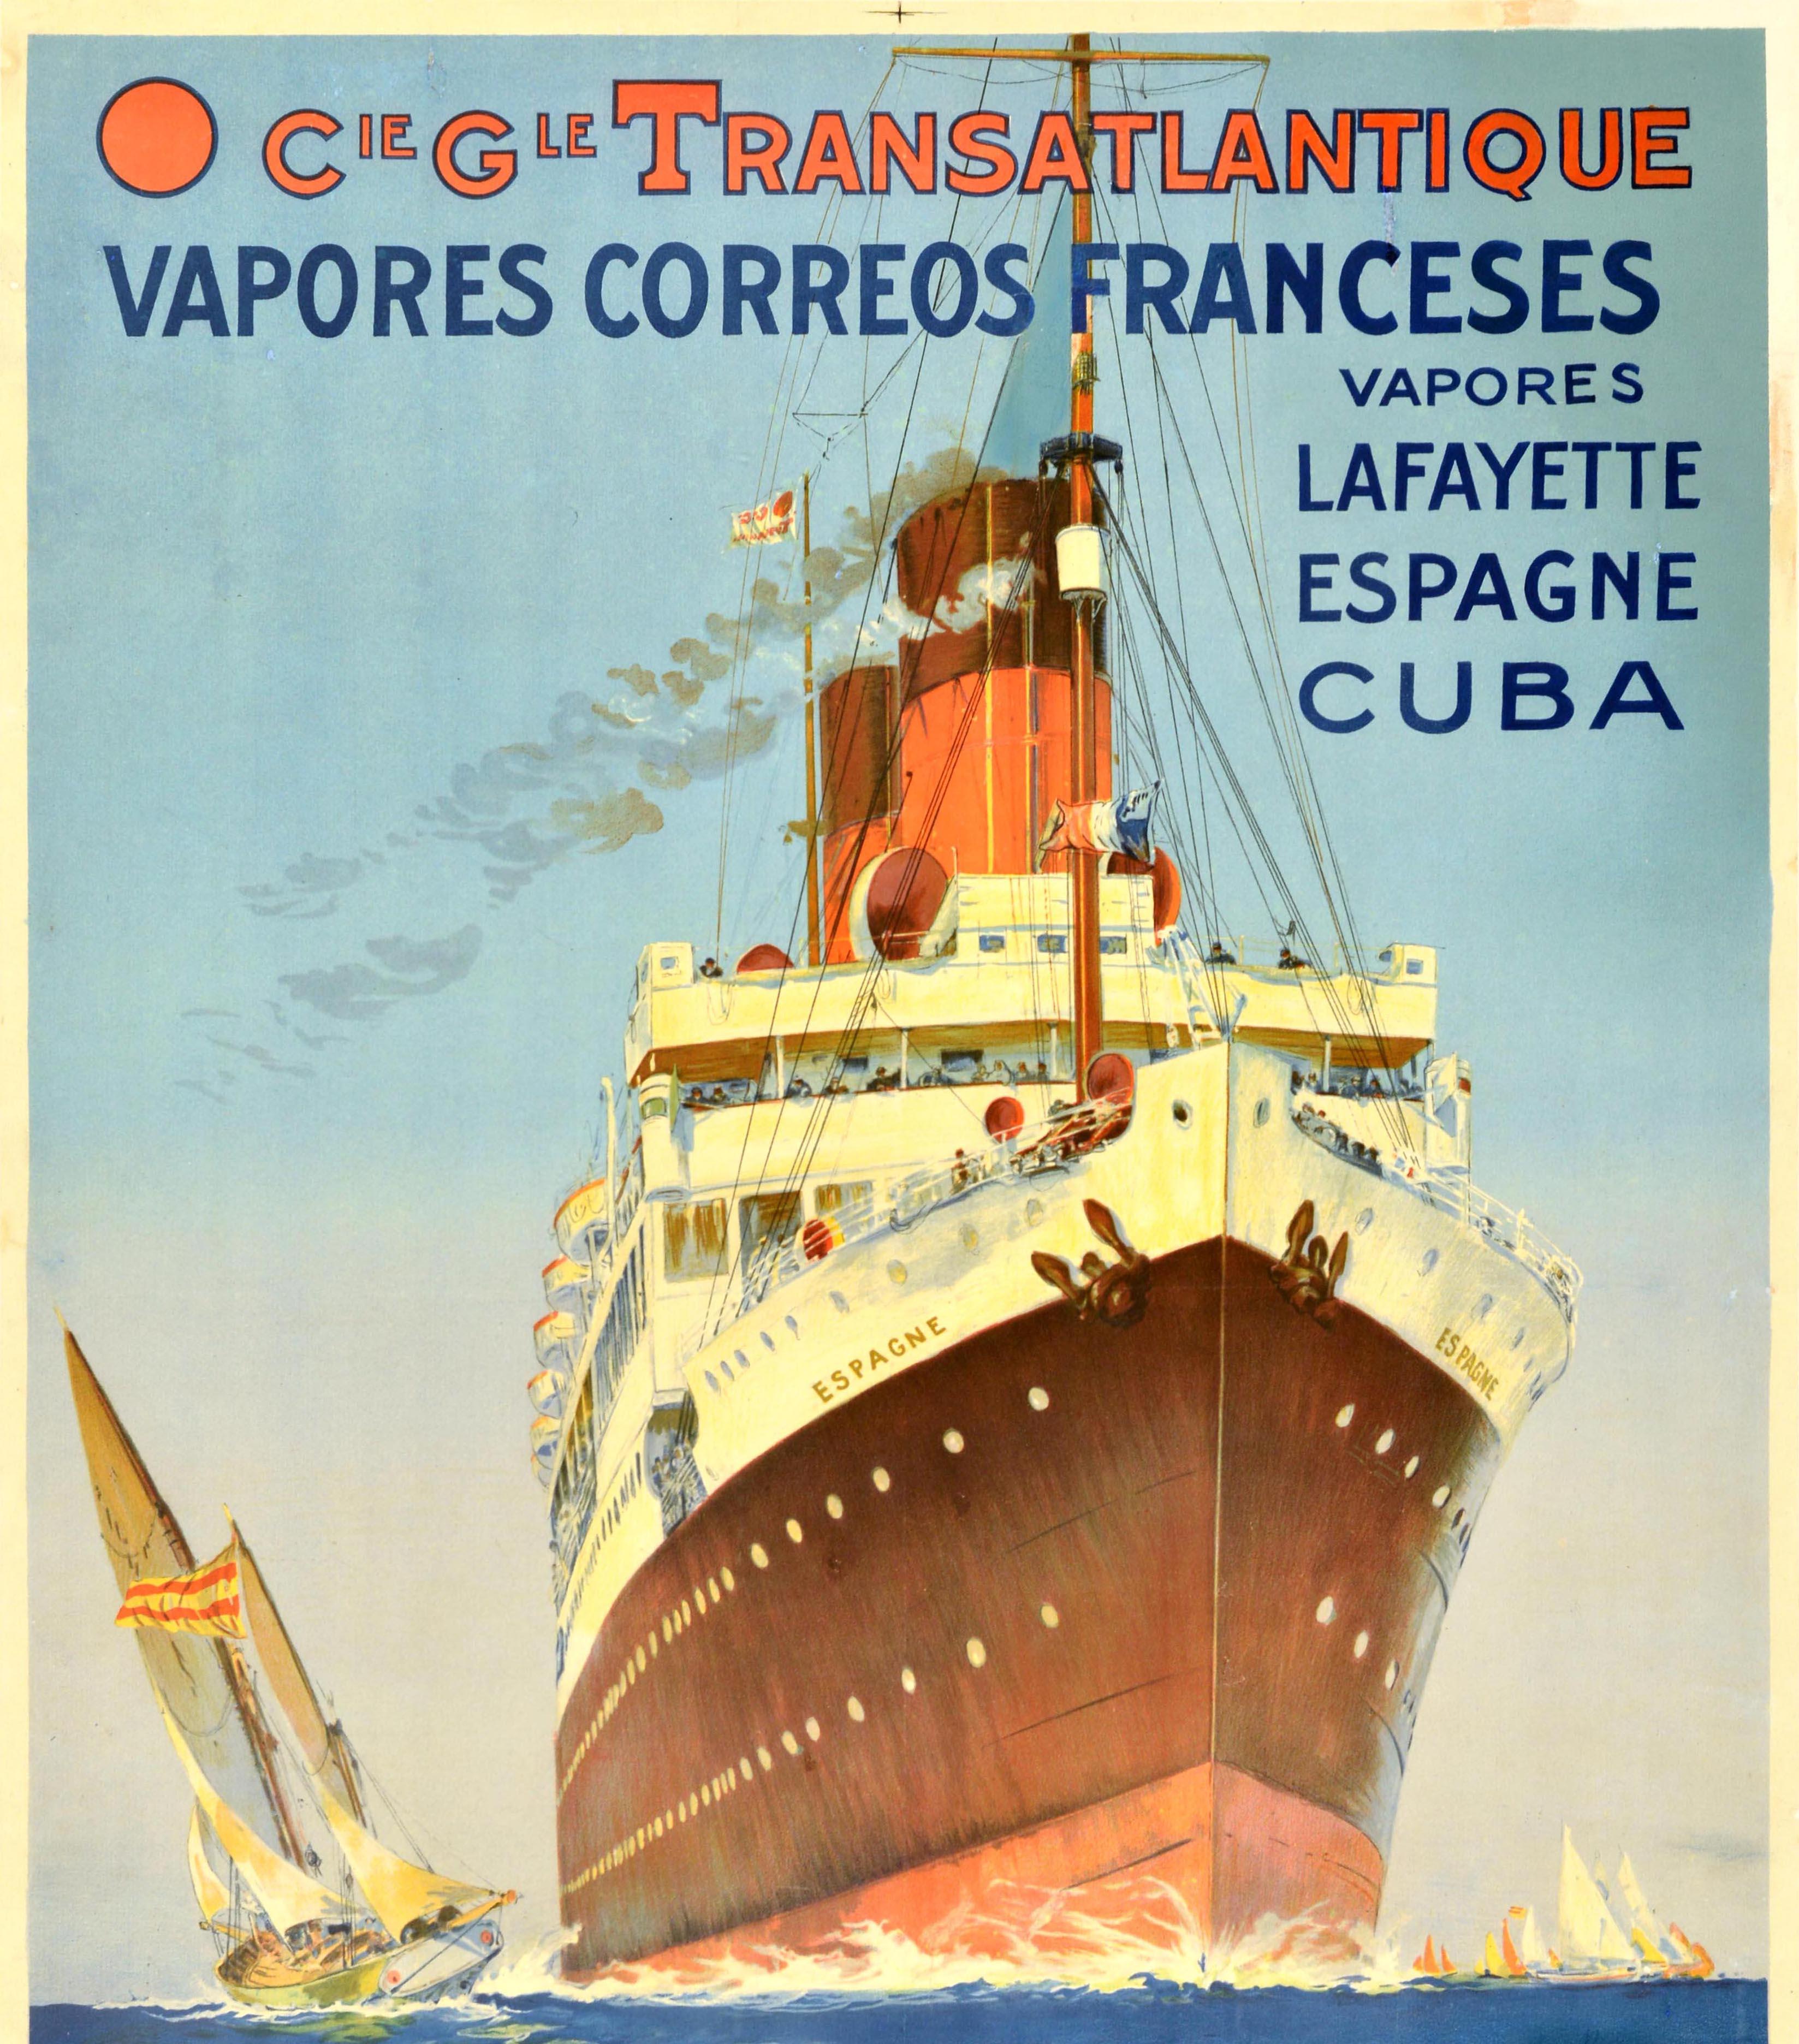 French Original Vintage Steam Ship Cruise Travel Poster Cie Gle Transatlantique Espagne For Sale